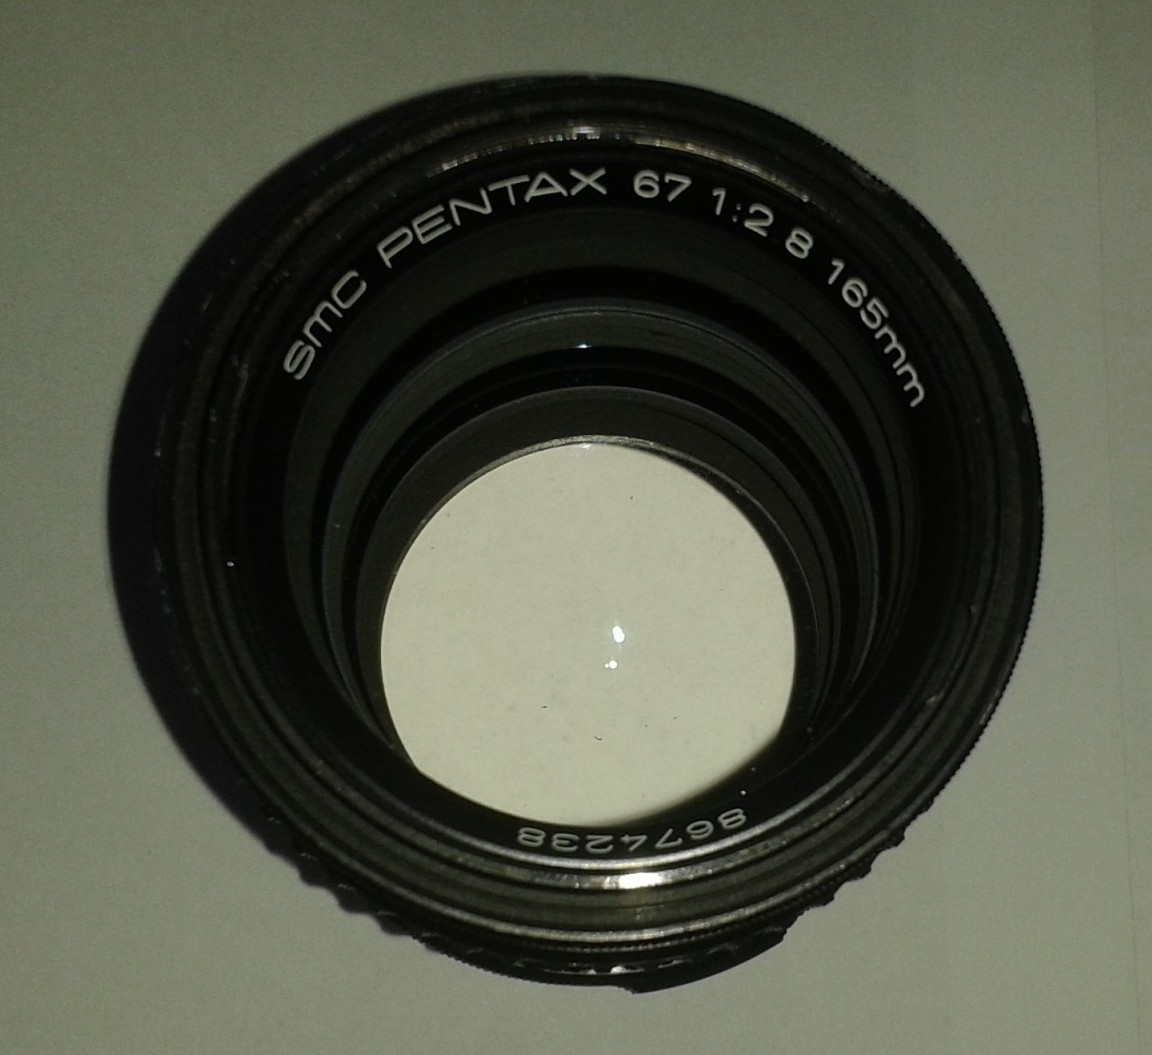 Pentax 67 165mm f28 02.jpg